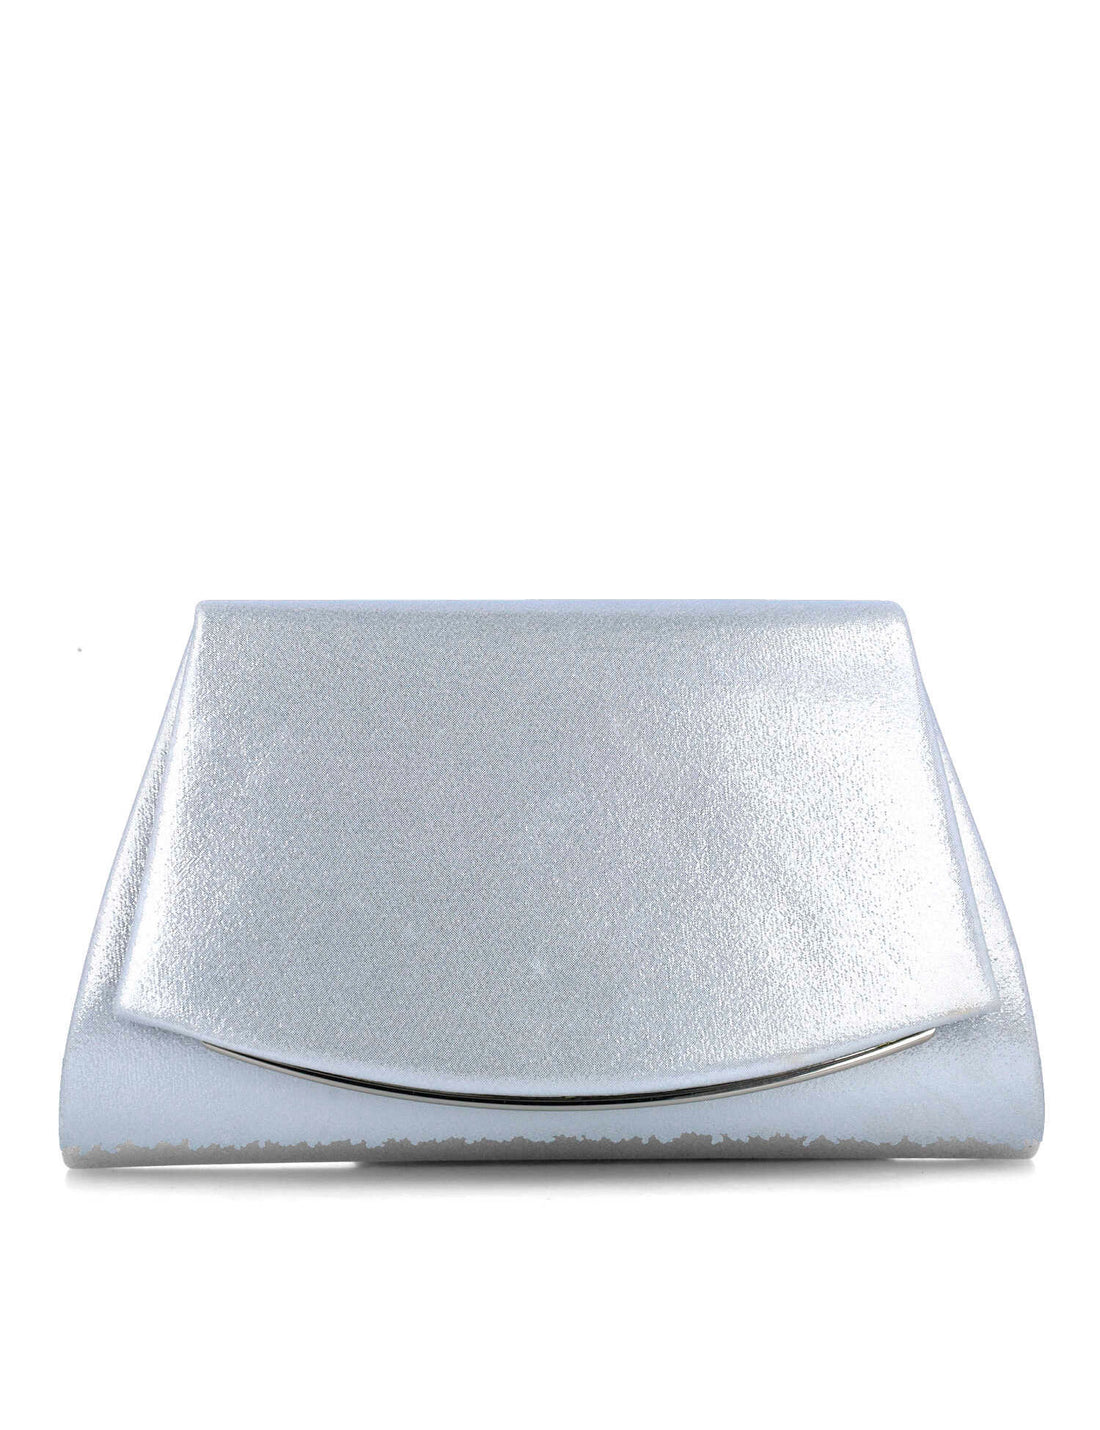 Silver Shimmery Clutch_85486_09_01